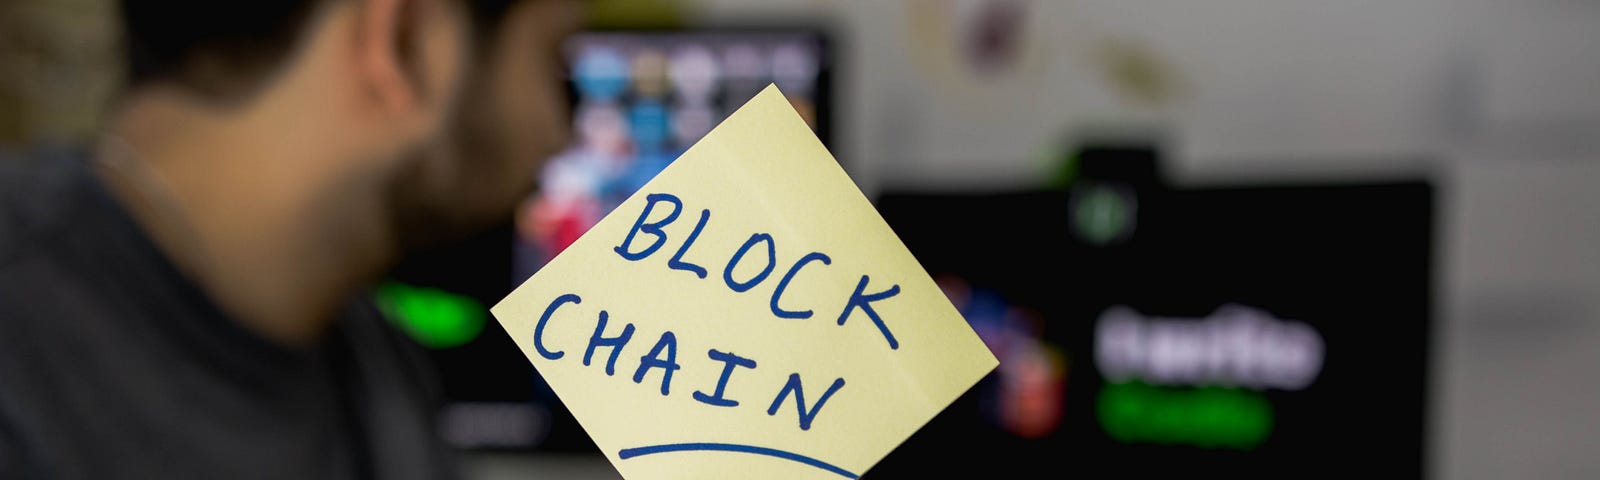 Blockchain Business Future